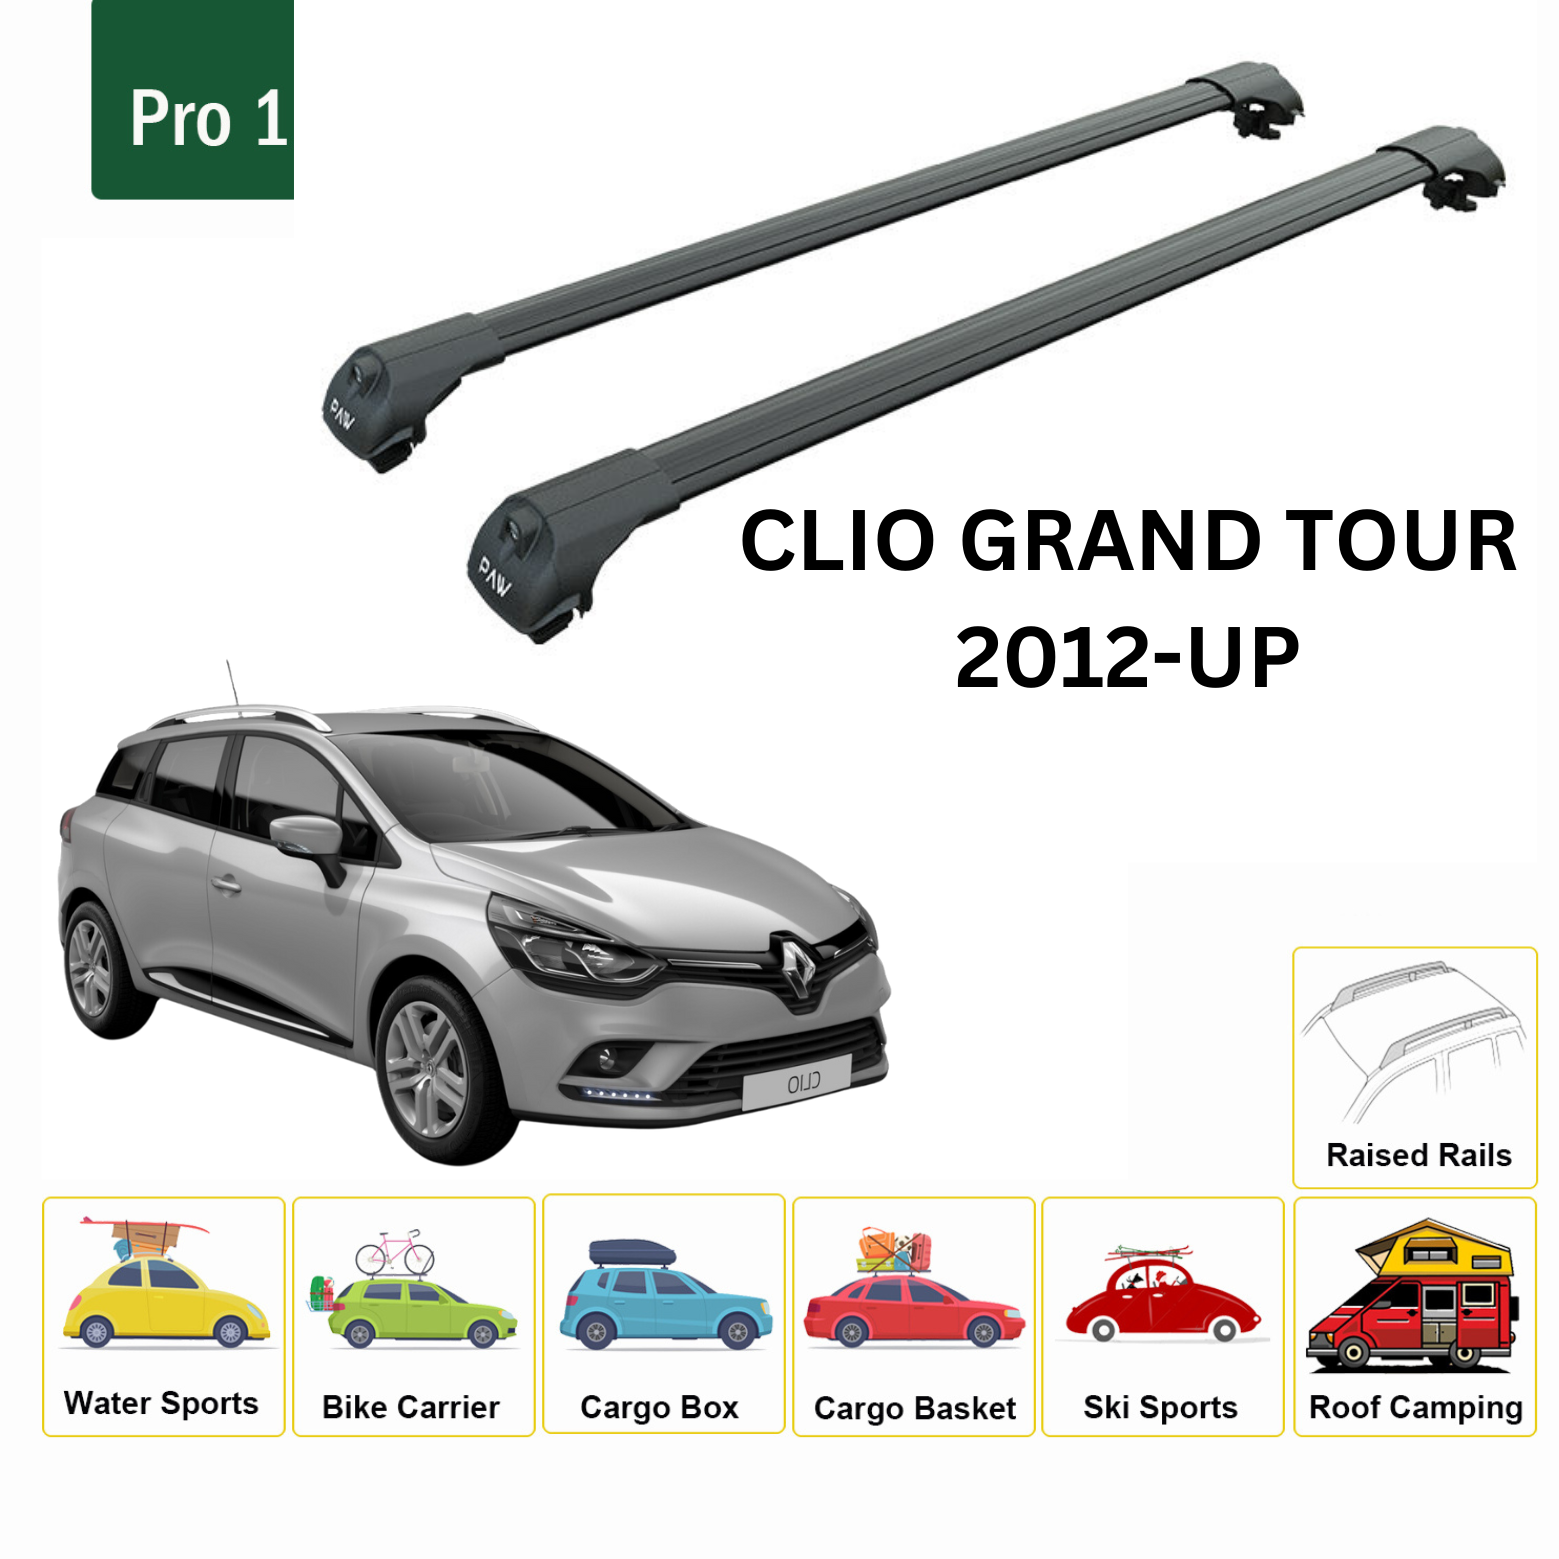 For Renault Clio Grand Tour 2012-Up Roof Rack System, Aluminium Cross Bar, Metal Bracket, Normal Roof, Black - 0